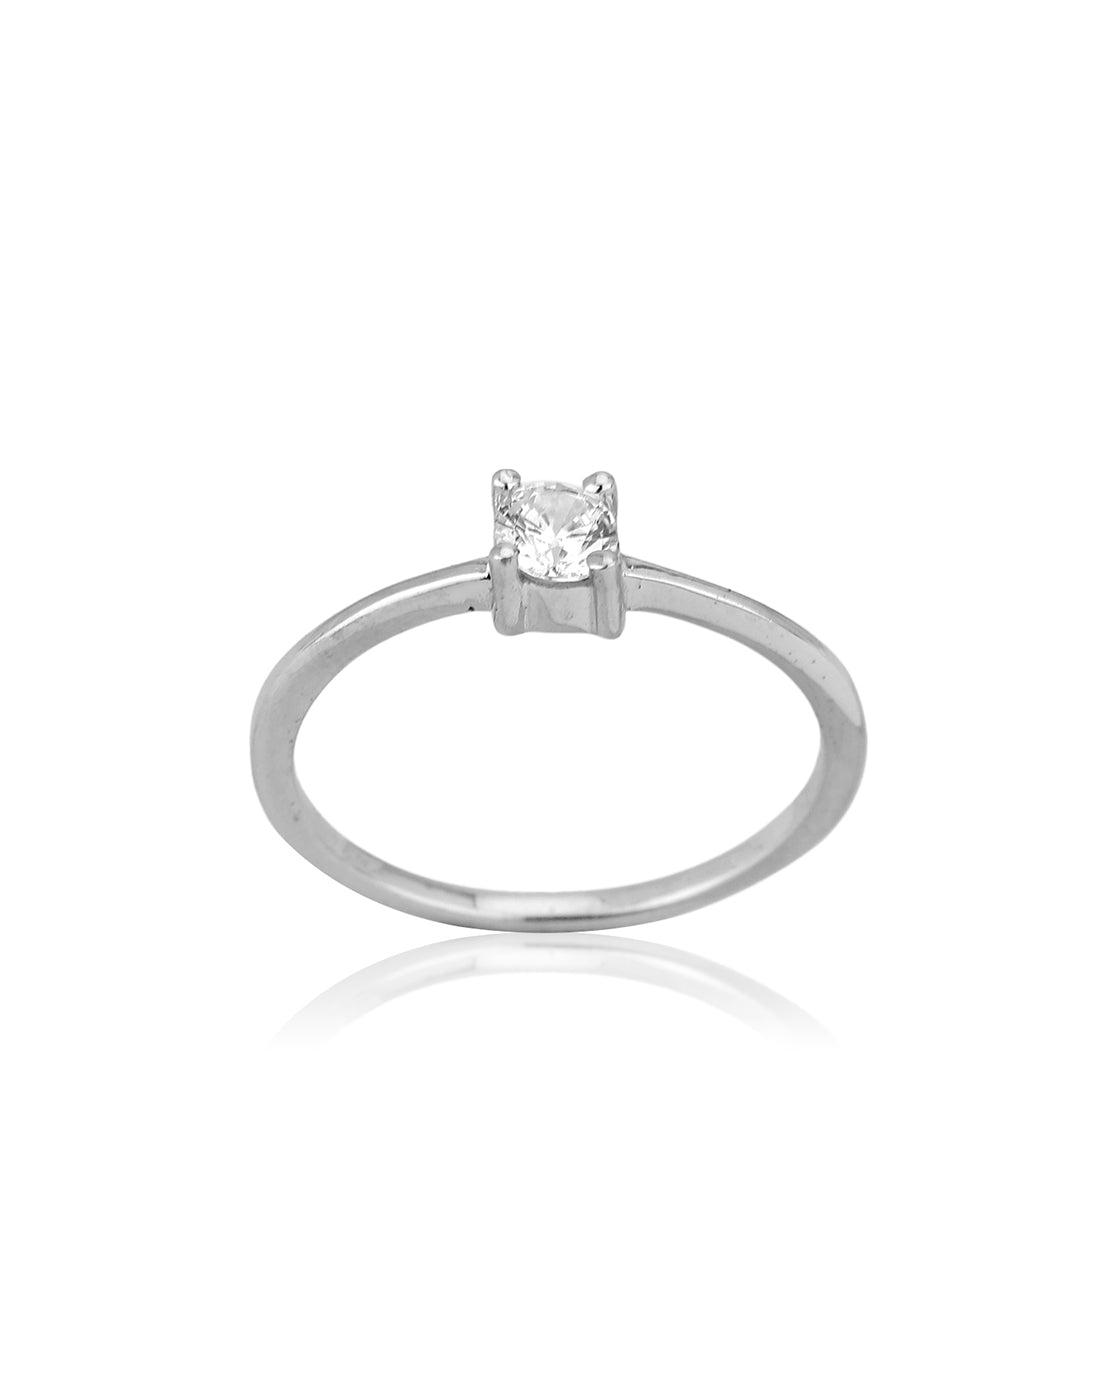 925 Sterling Silver Ring at Rs 4000/piece | 925 खरी चांदी की अंगूठी in New  Delhi | ID: 25937186973